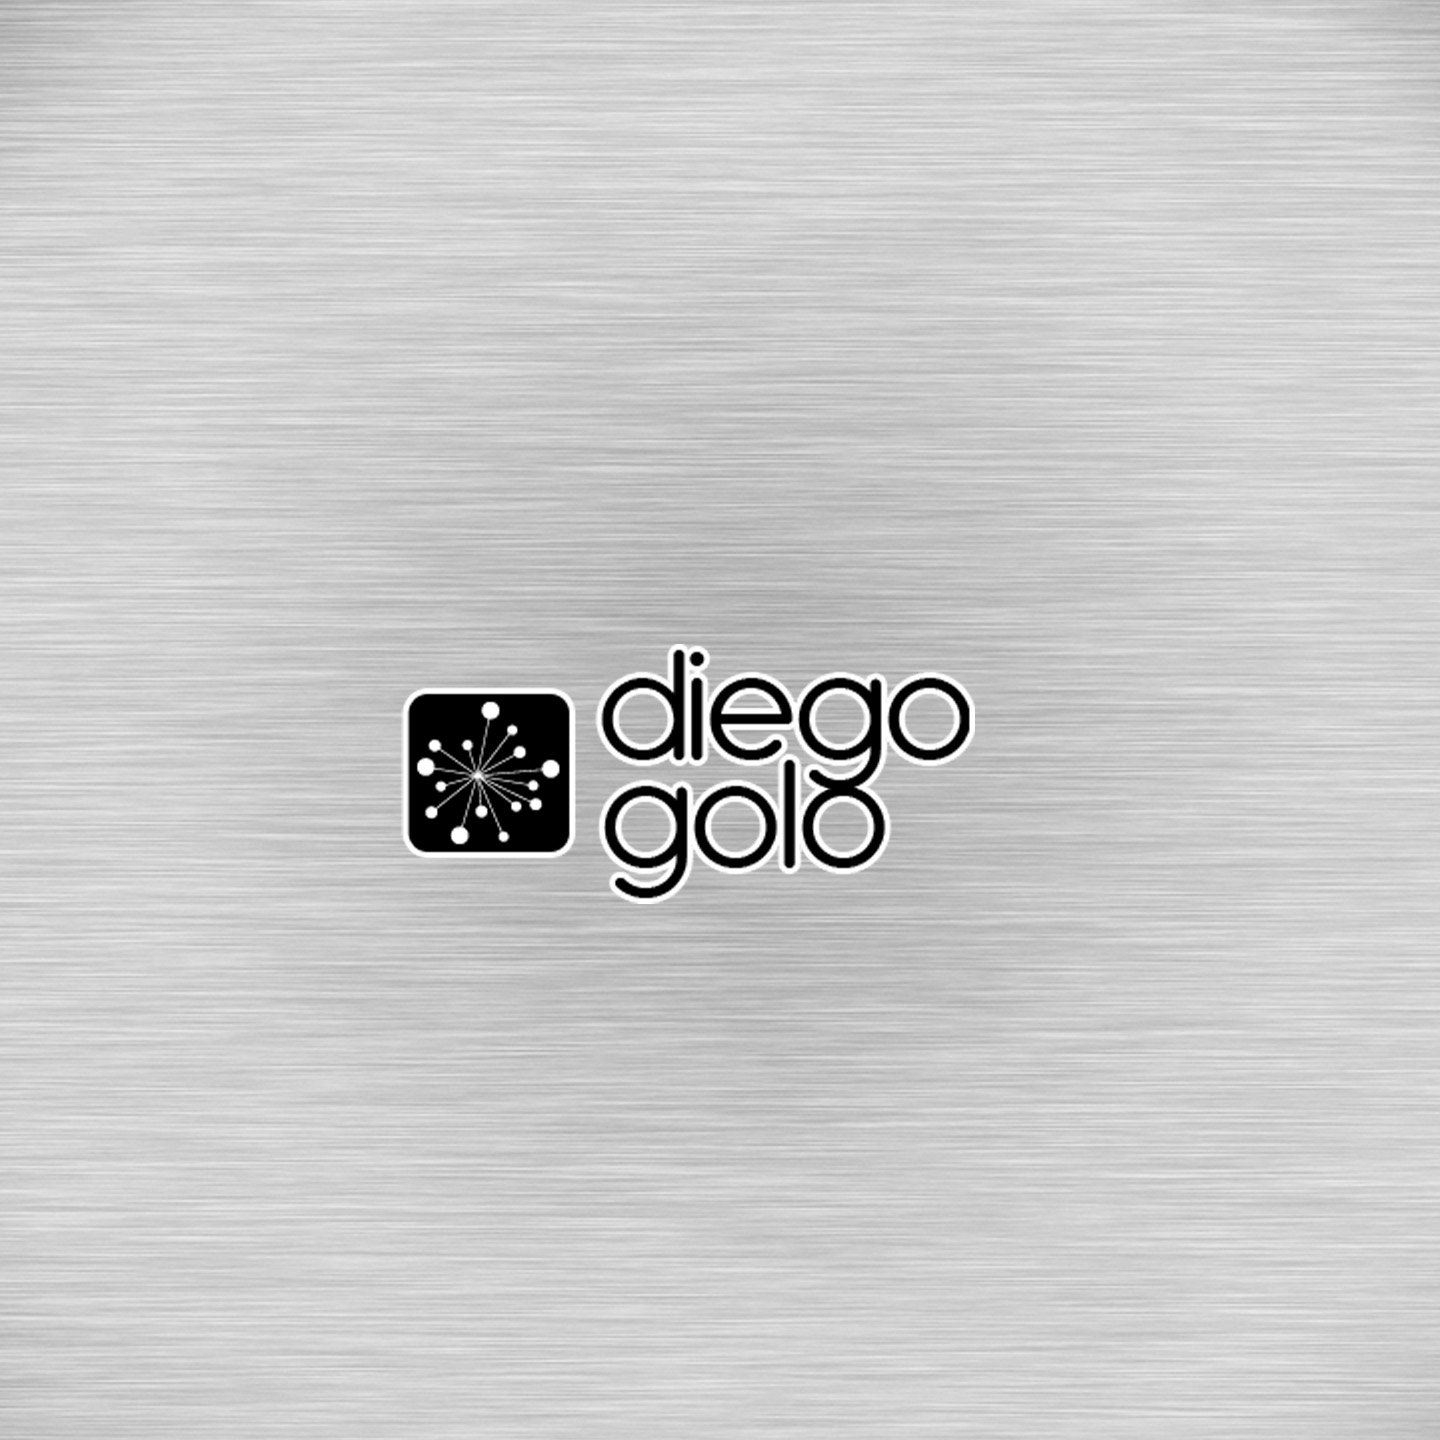 Diego GOLO (test)